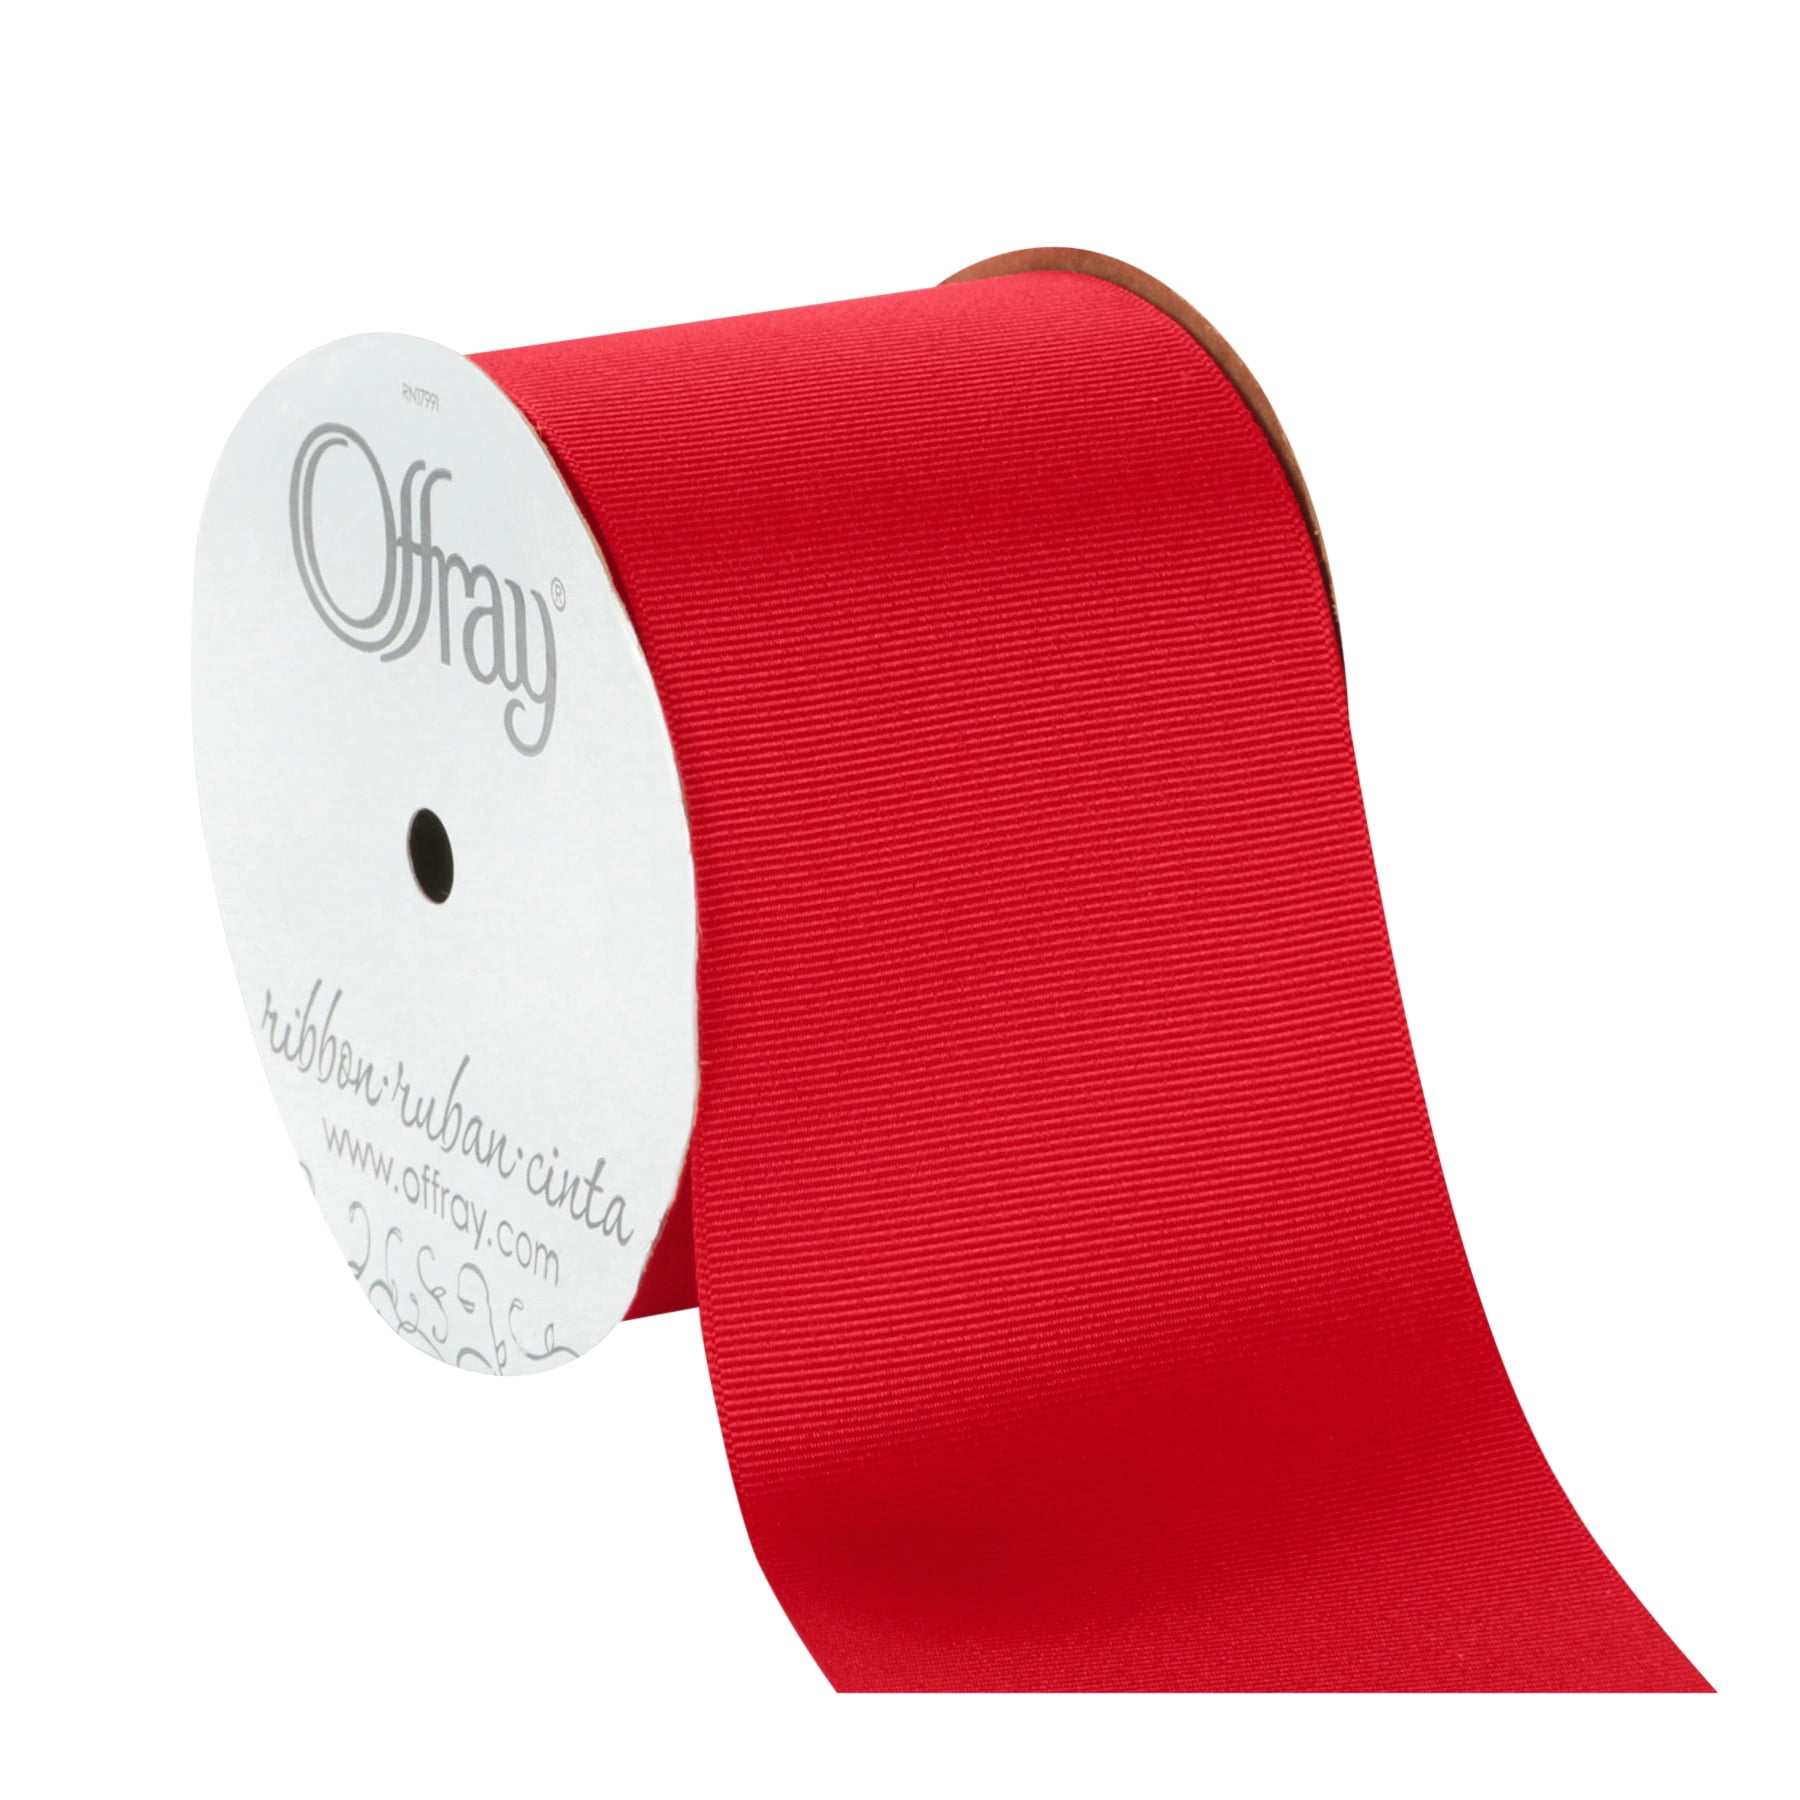 Offray 3x9' Grosgrain Solid Ribbon